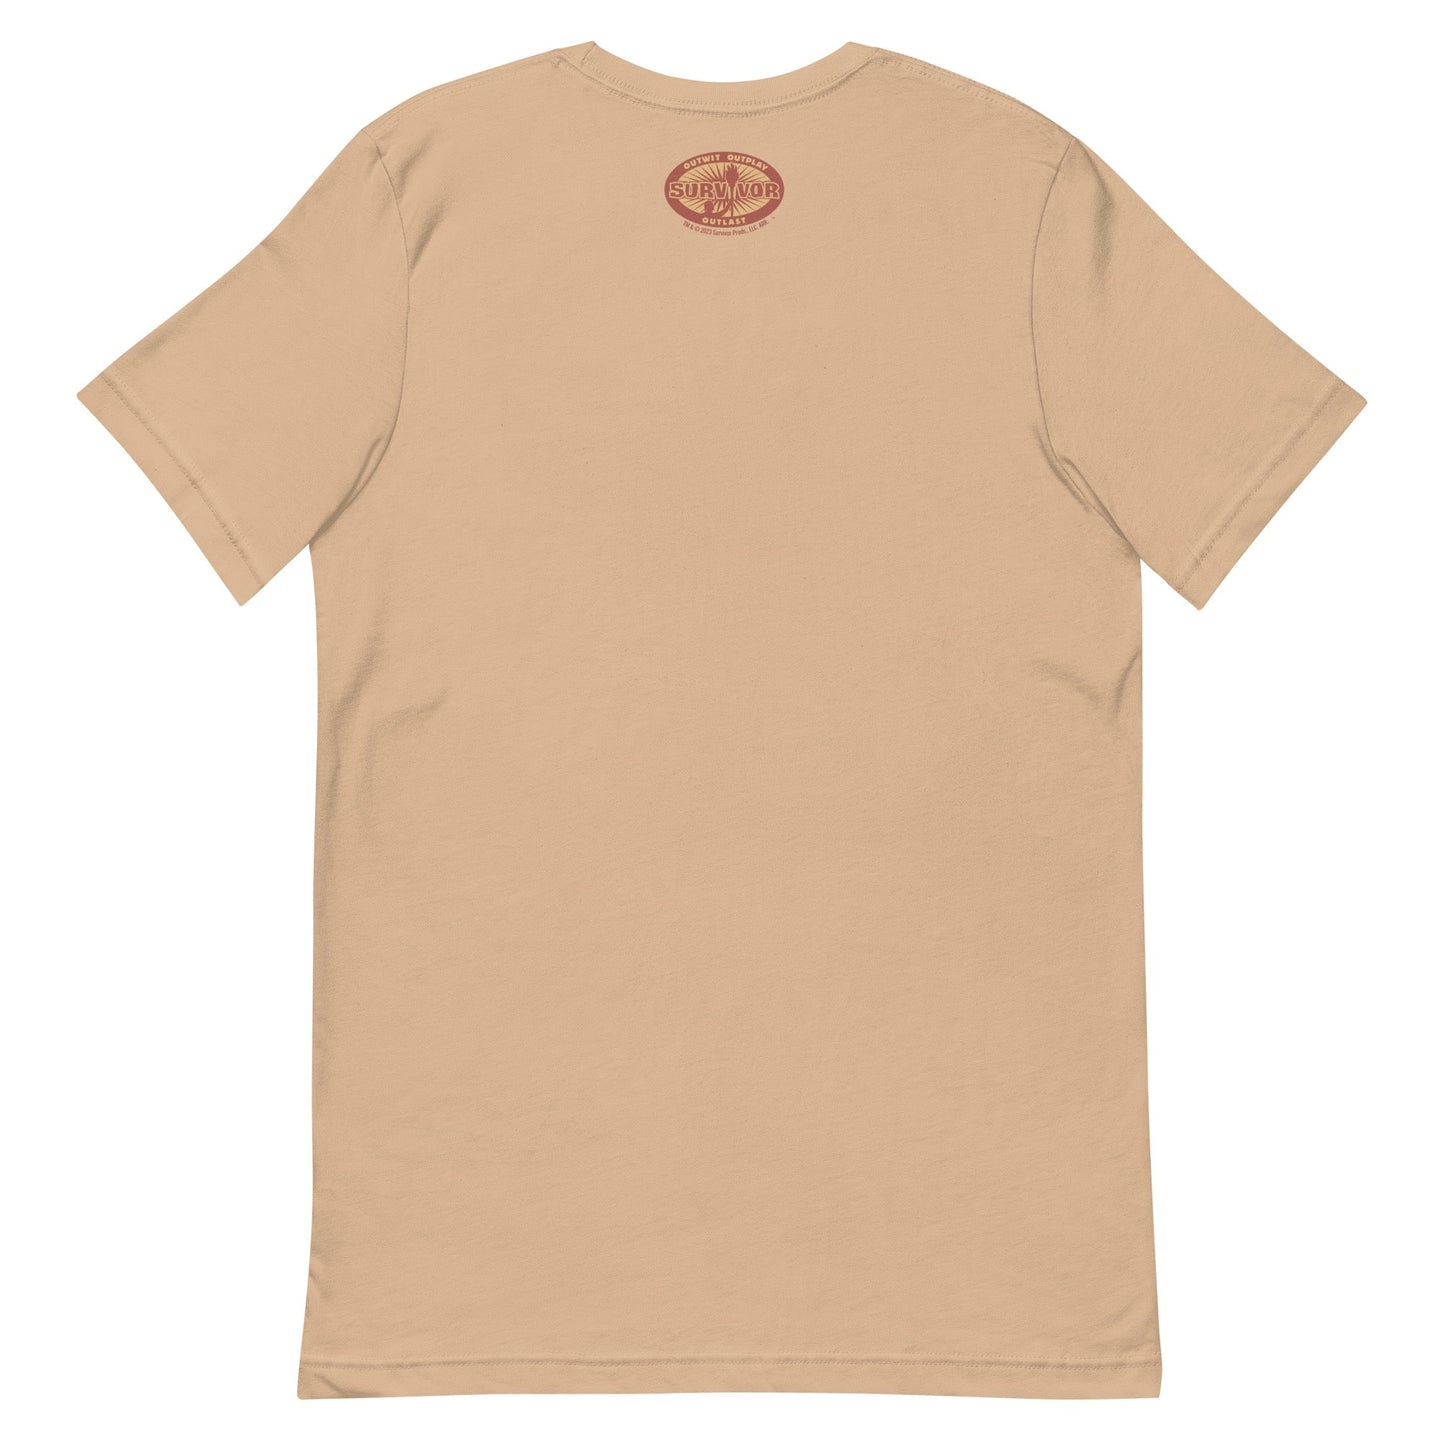 Survivor Borneo T - Shirt - Paramount Shop